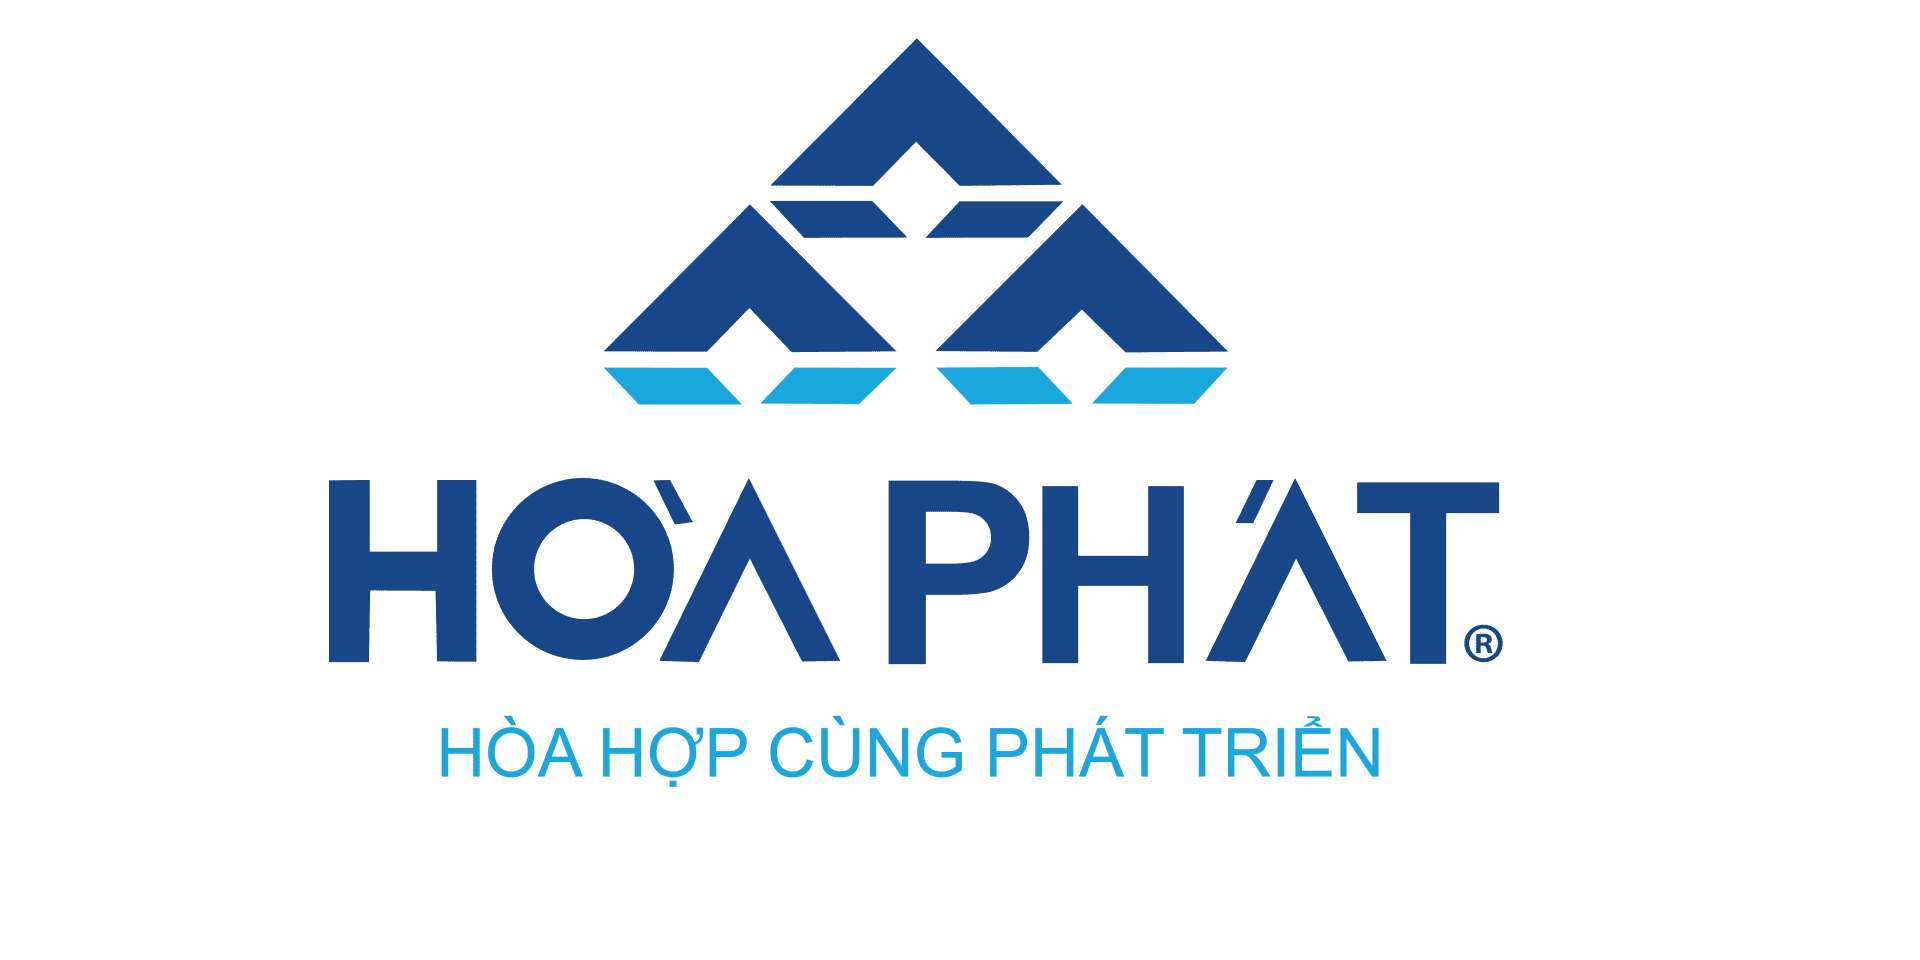 logo noi that hoa phat